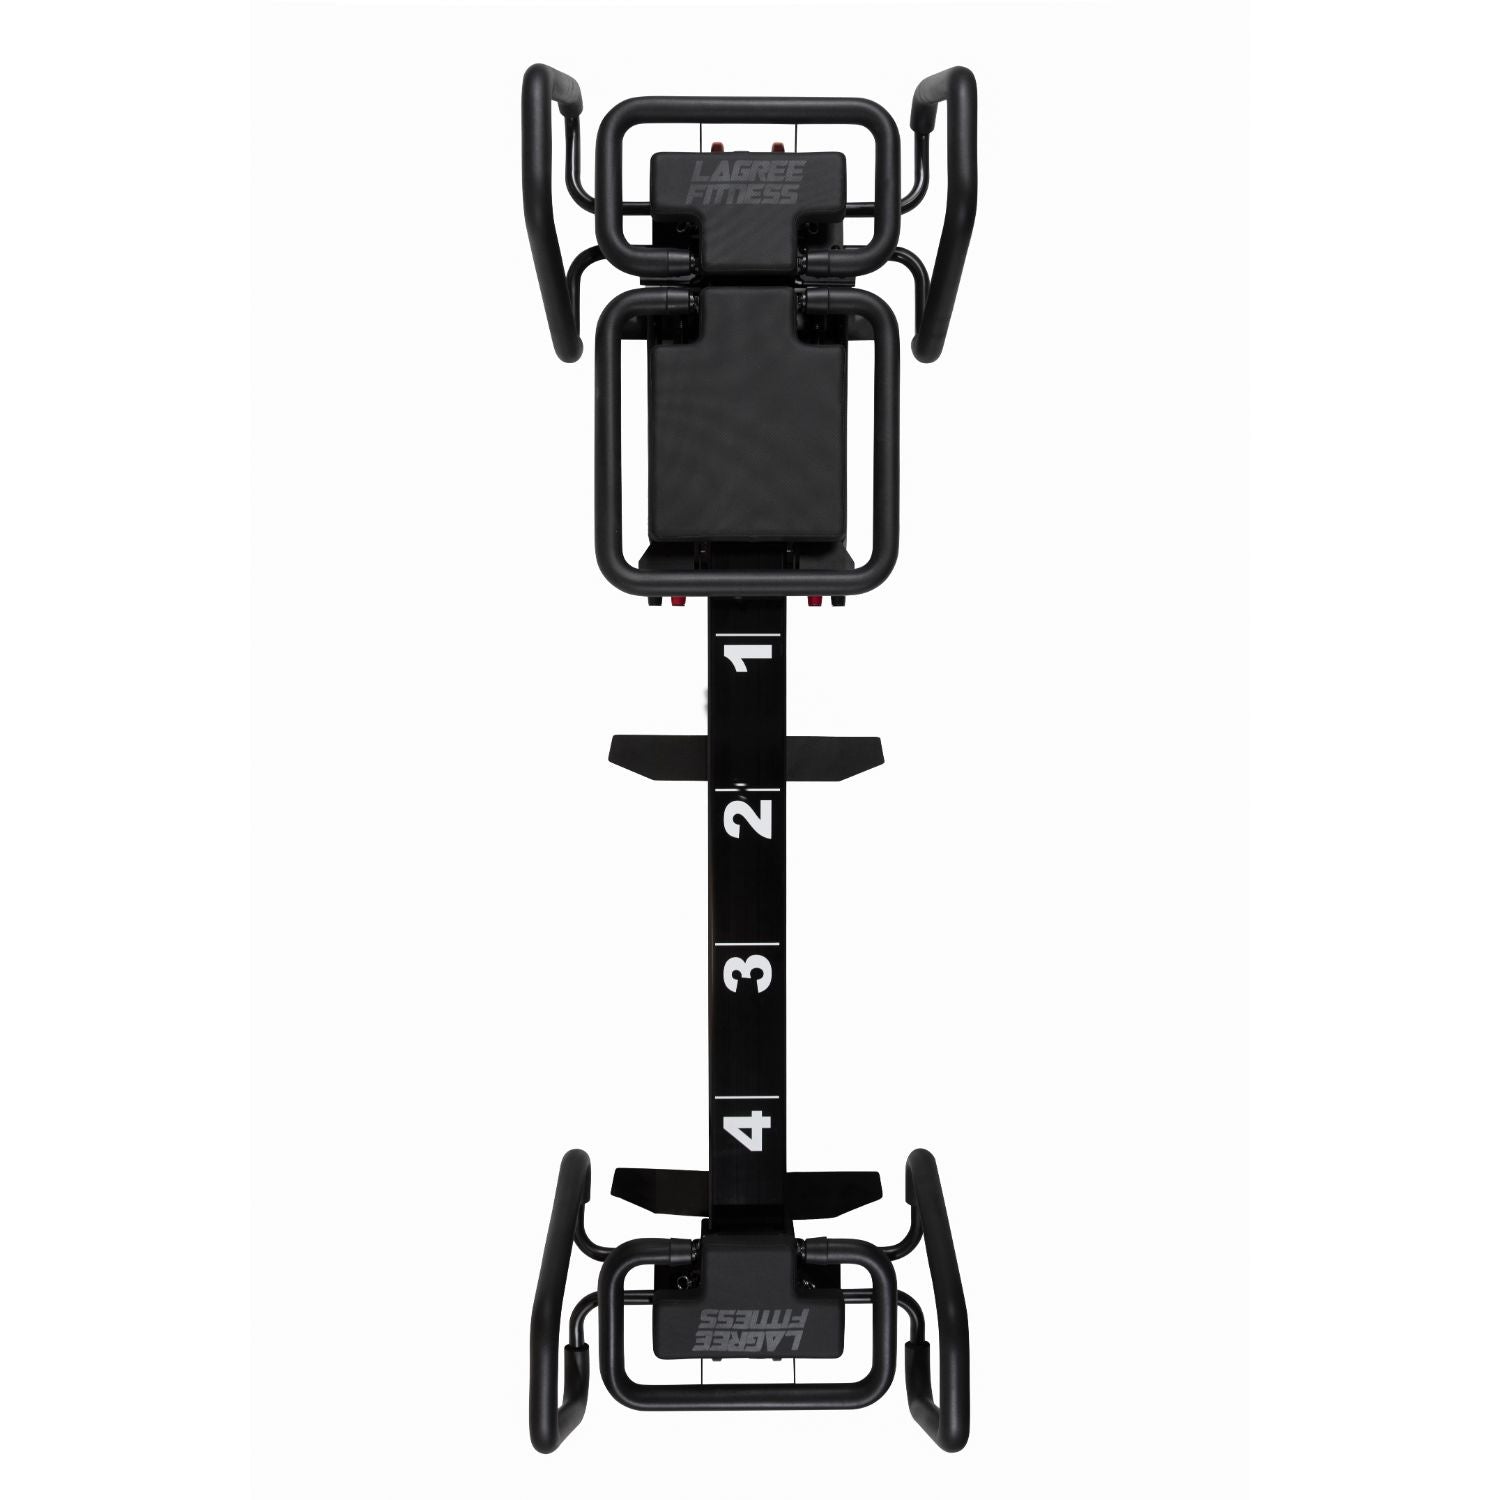 Lagree Fitness Microformer Fully Loaded Reformer - Pilates Reformers Plus